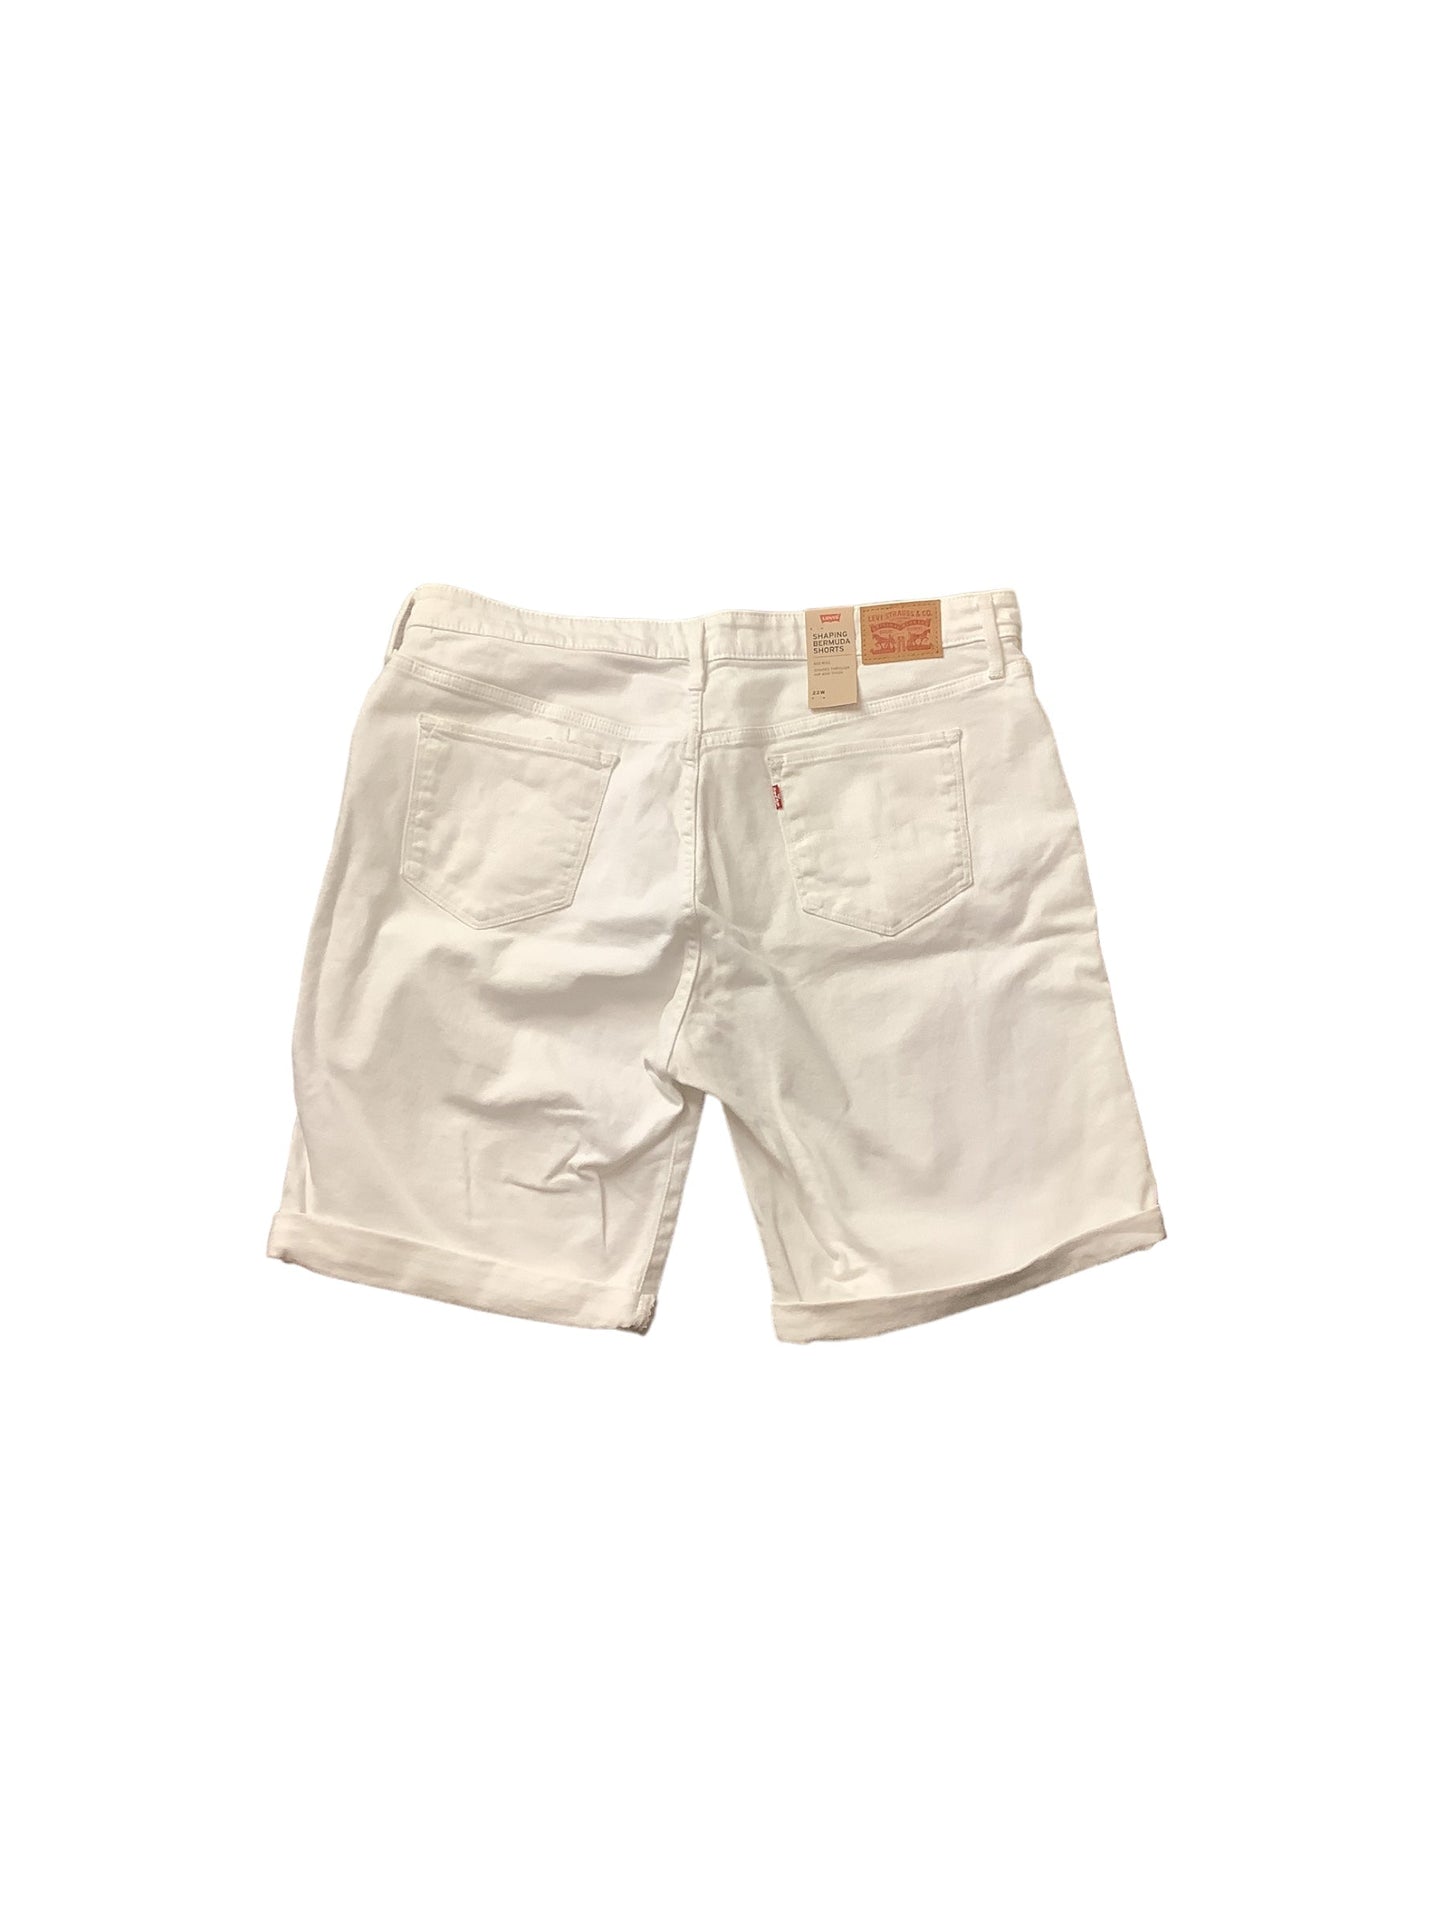 White Denim Shorts Levis, Size 22w